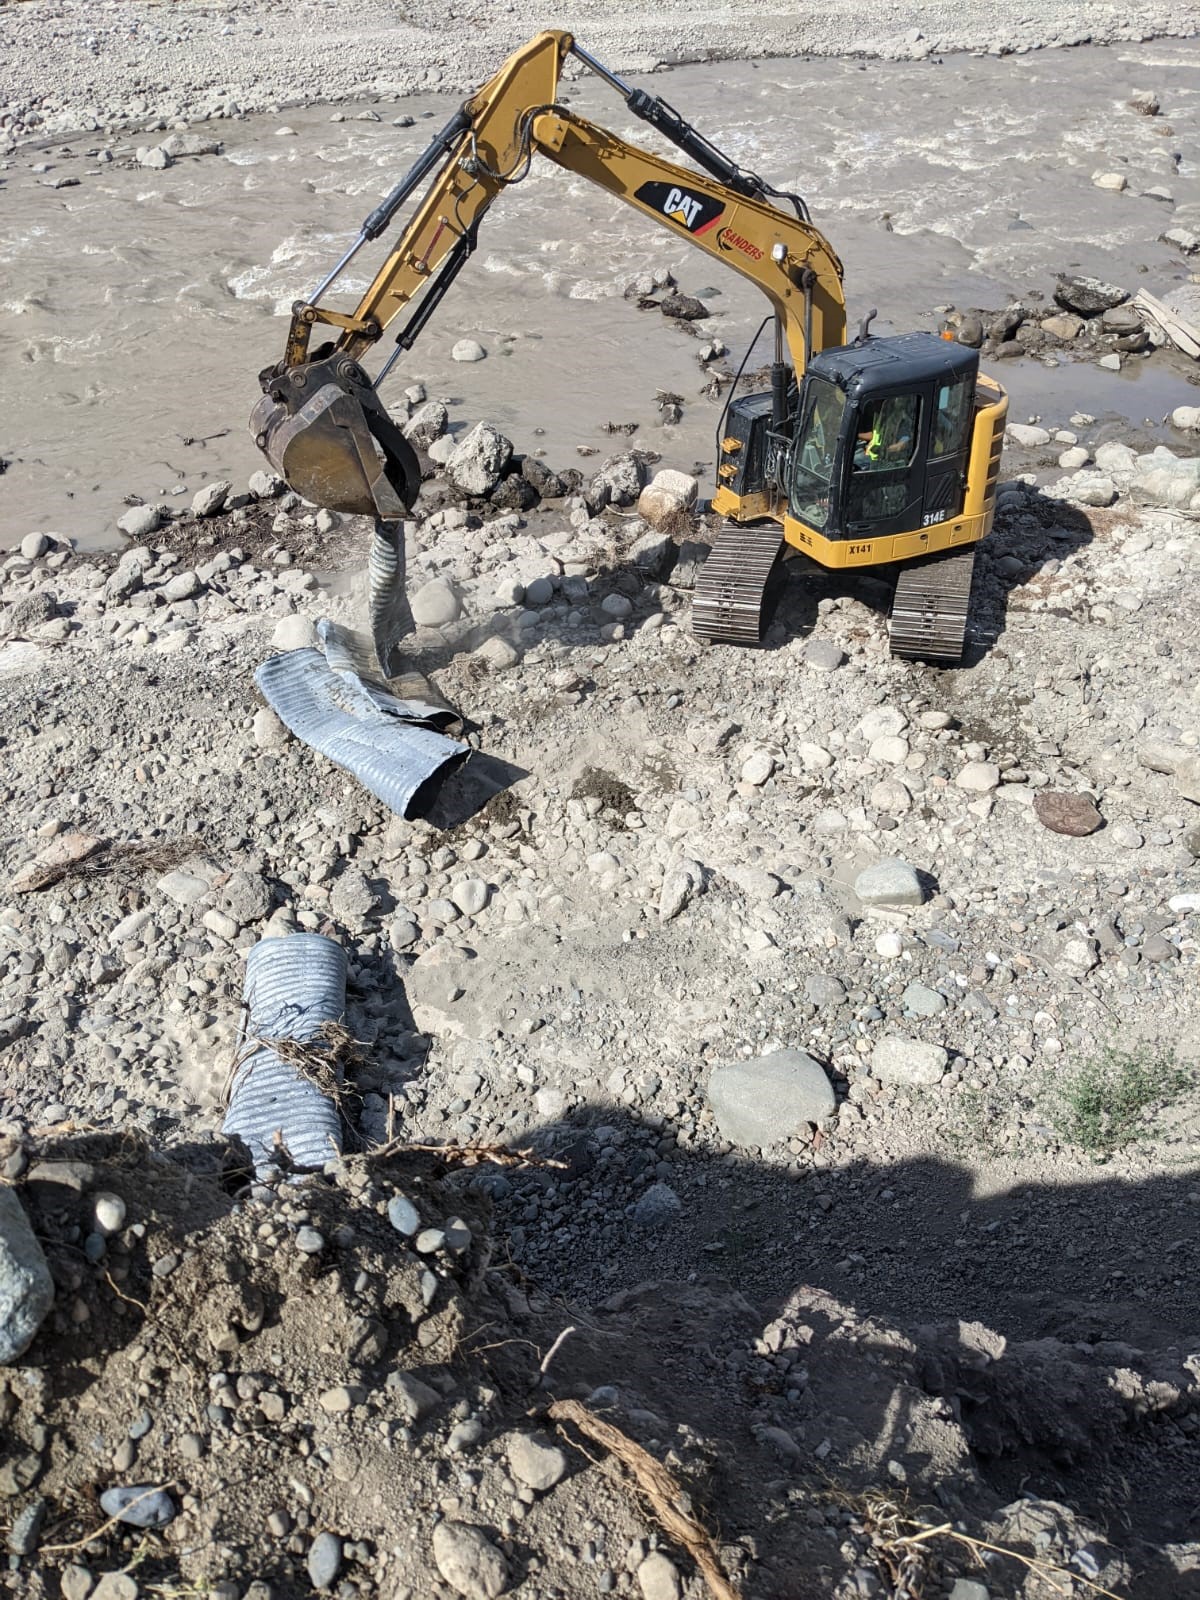 An excavator removes debris along the Nicola River